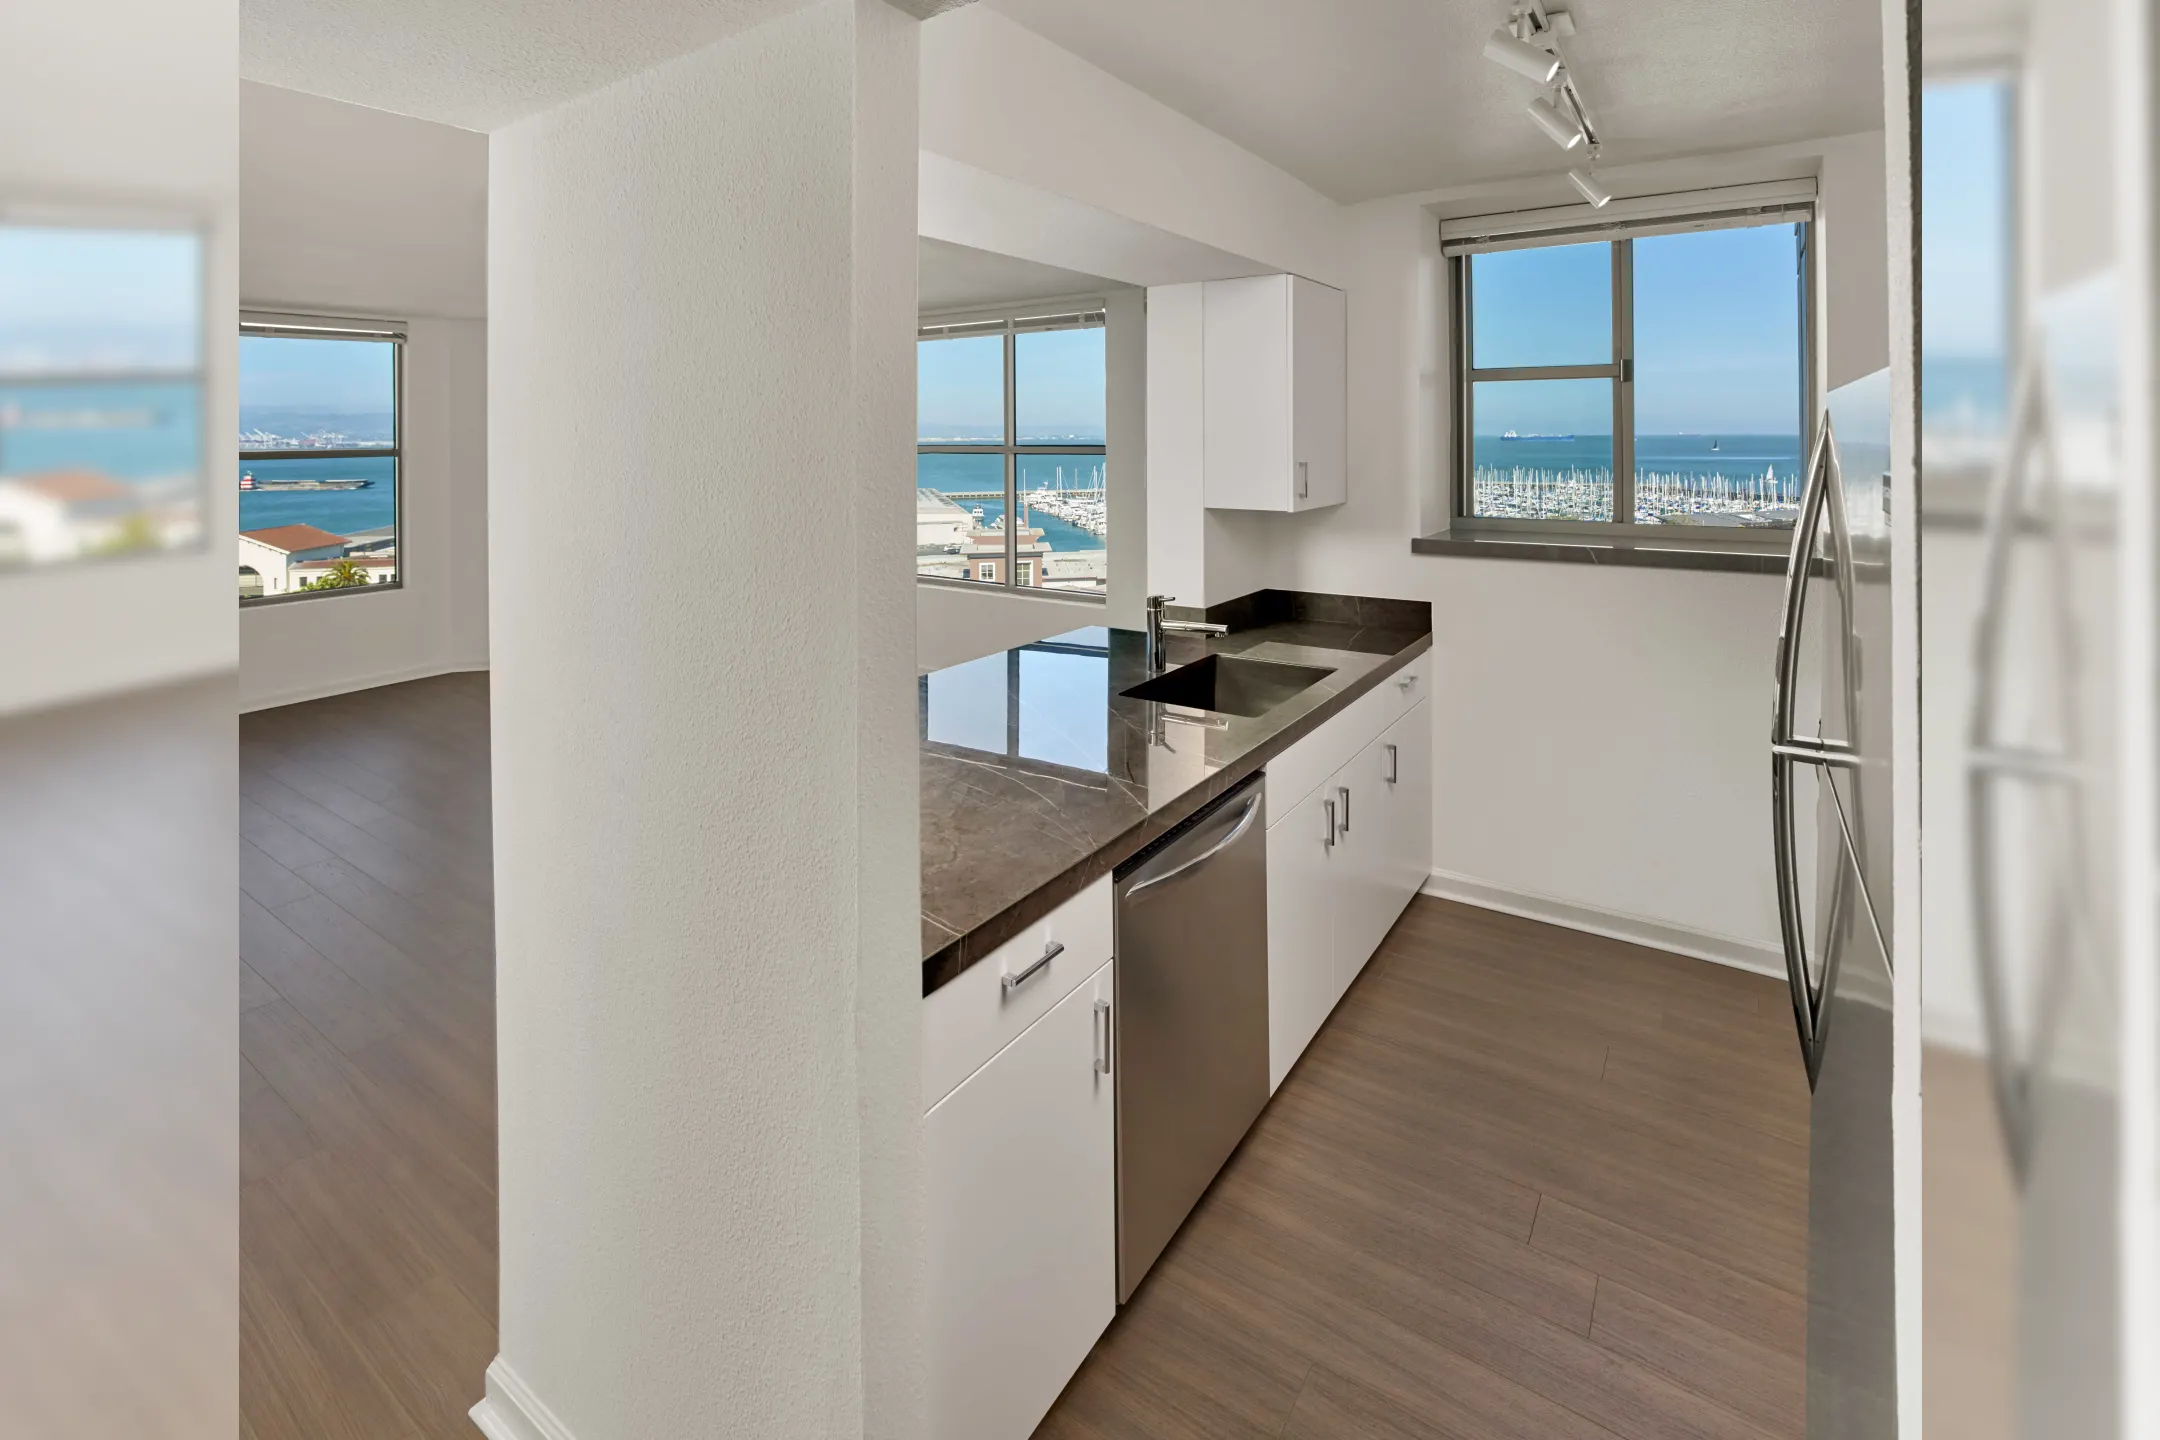 Kitchen - South Beach Marina Apartments - San Francisco, CA